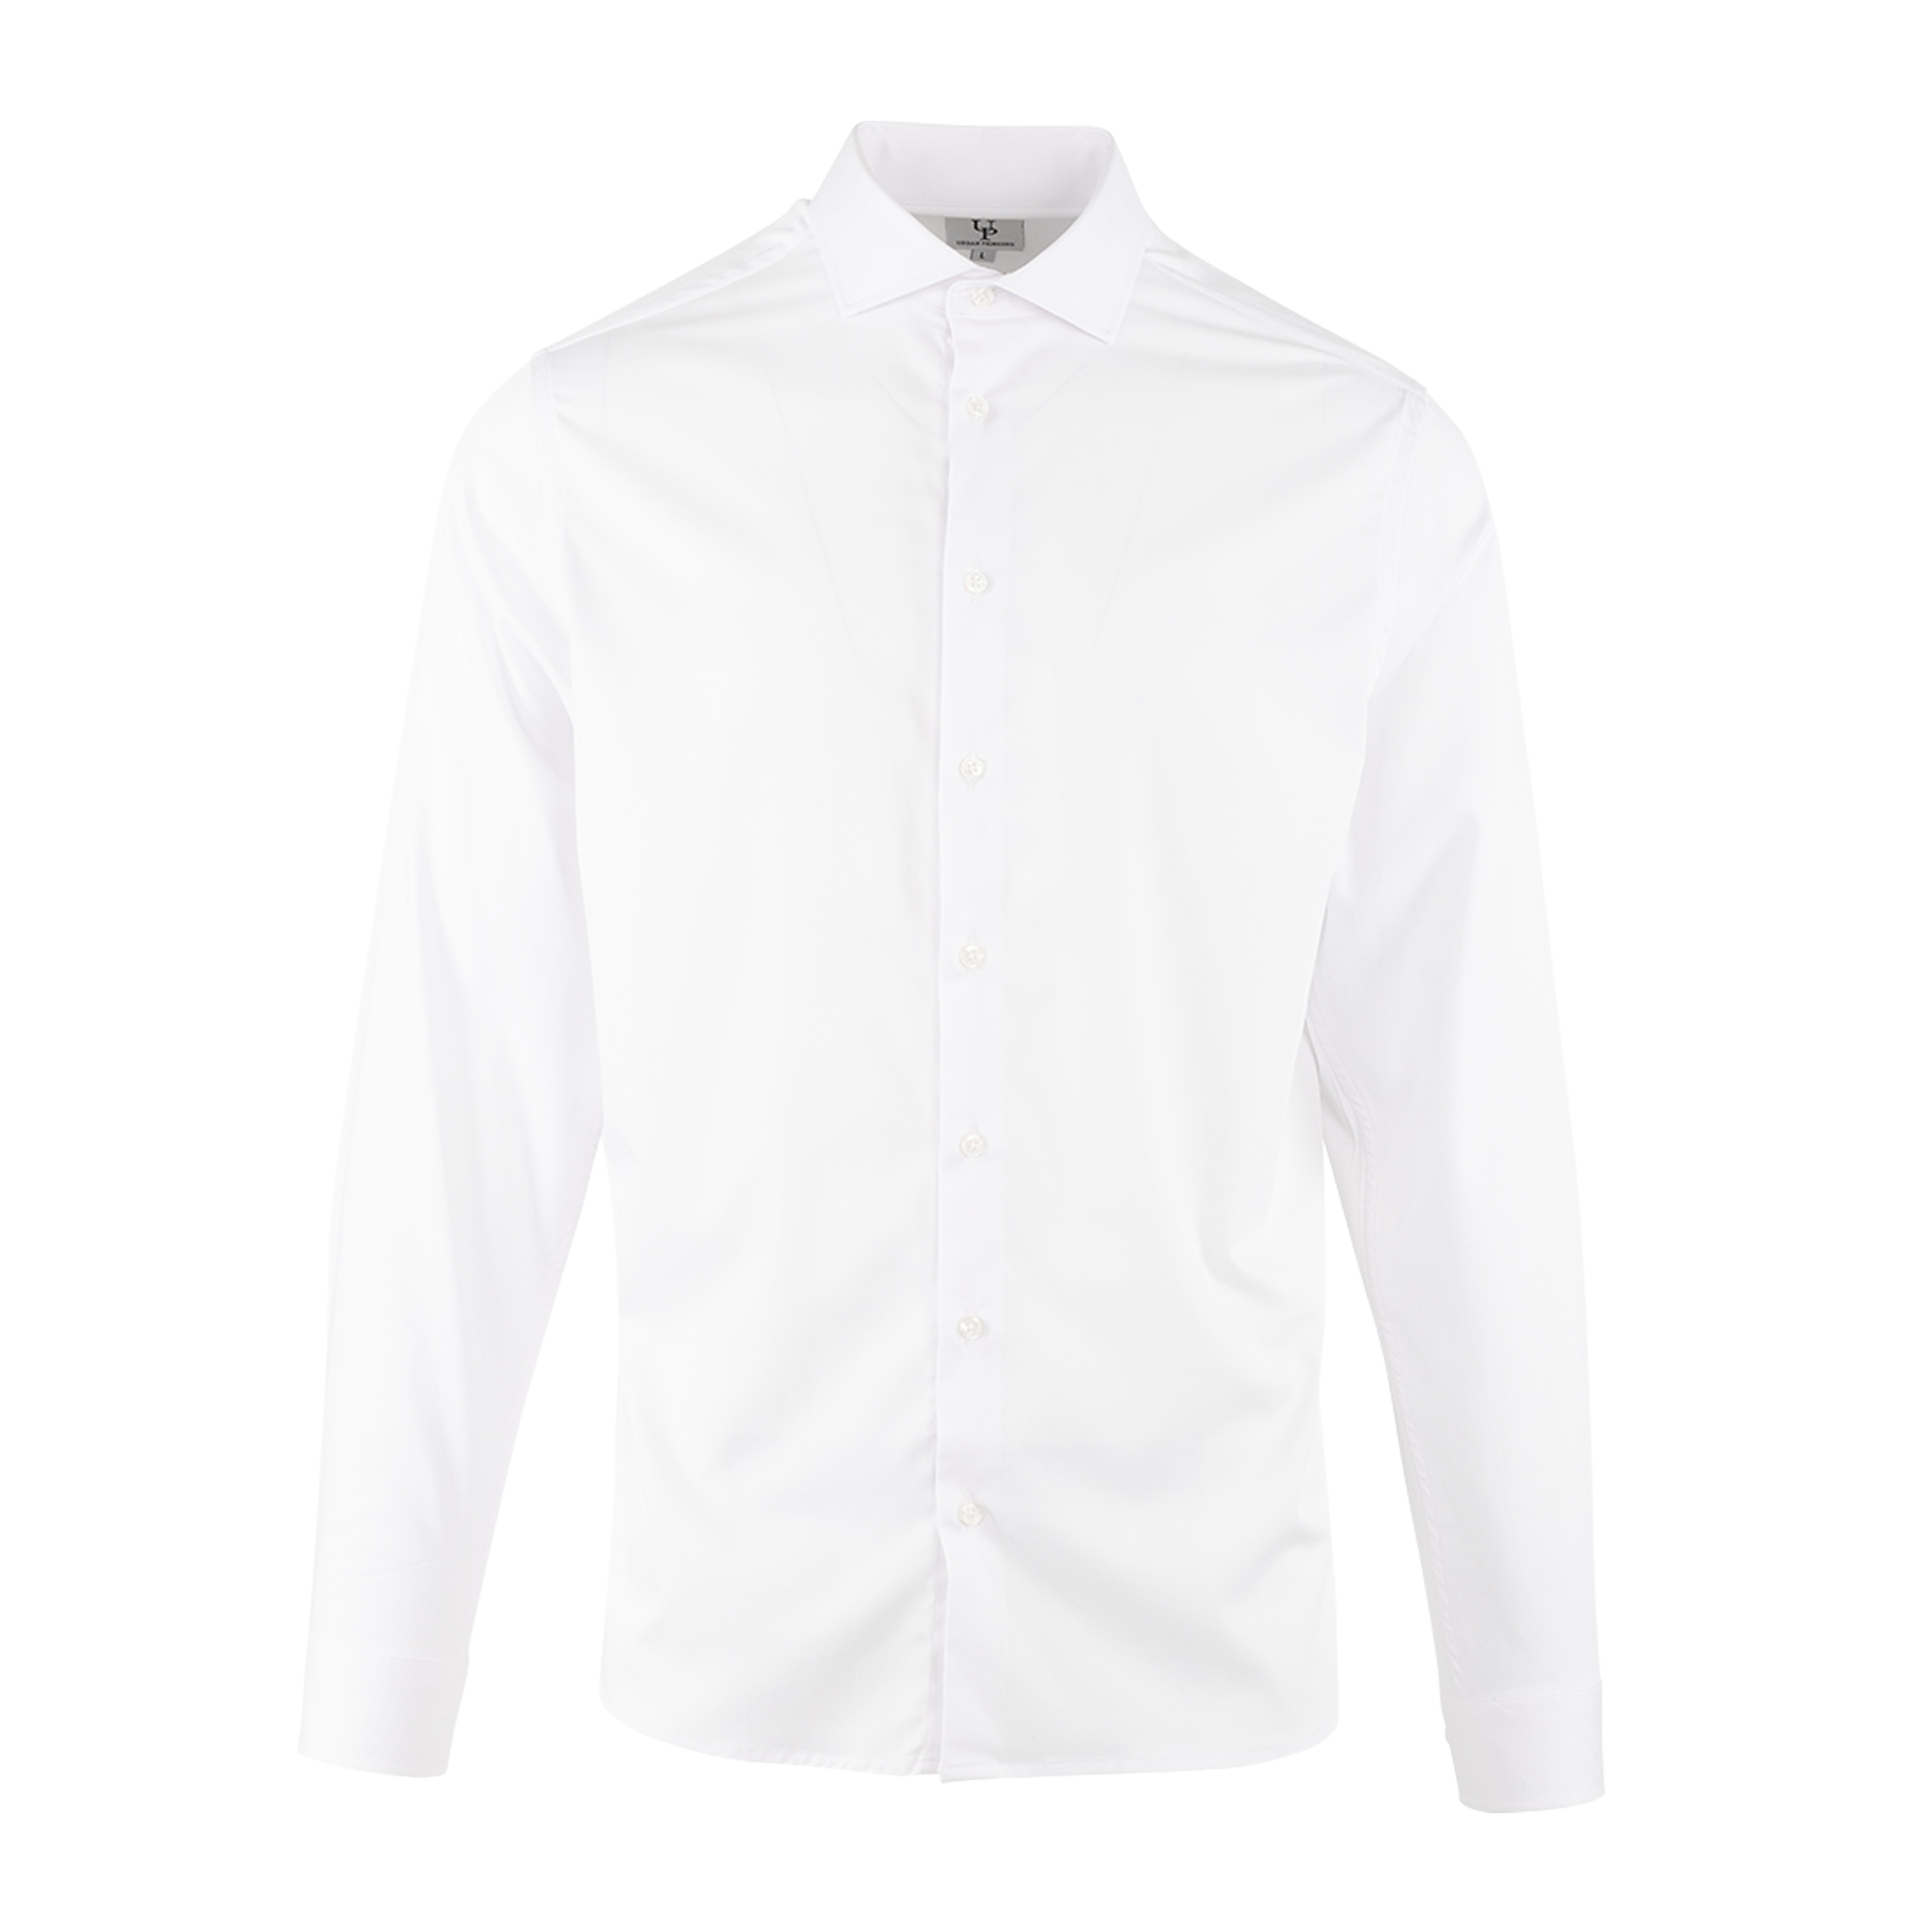 Urban Pioneers - Brimi Shirt White 